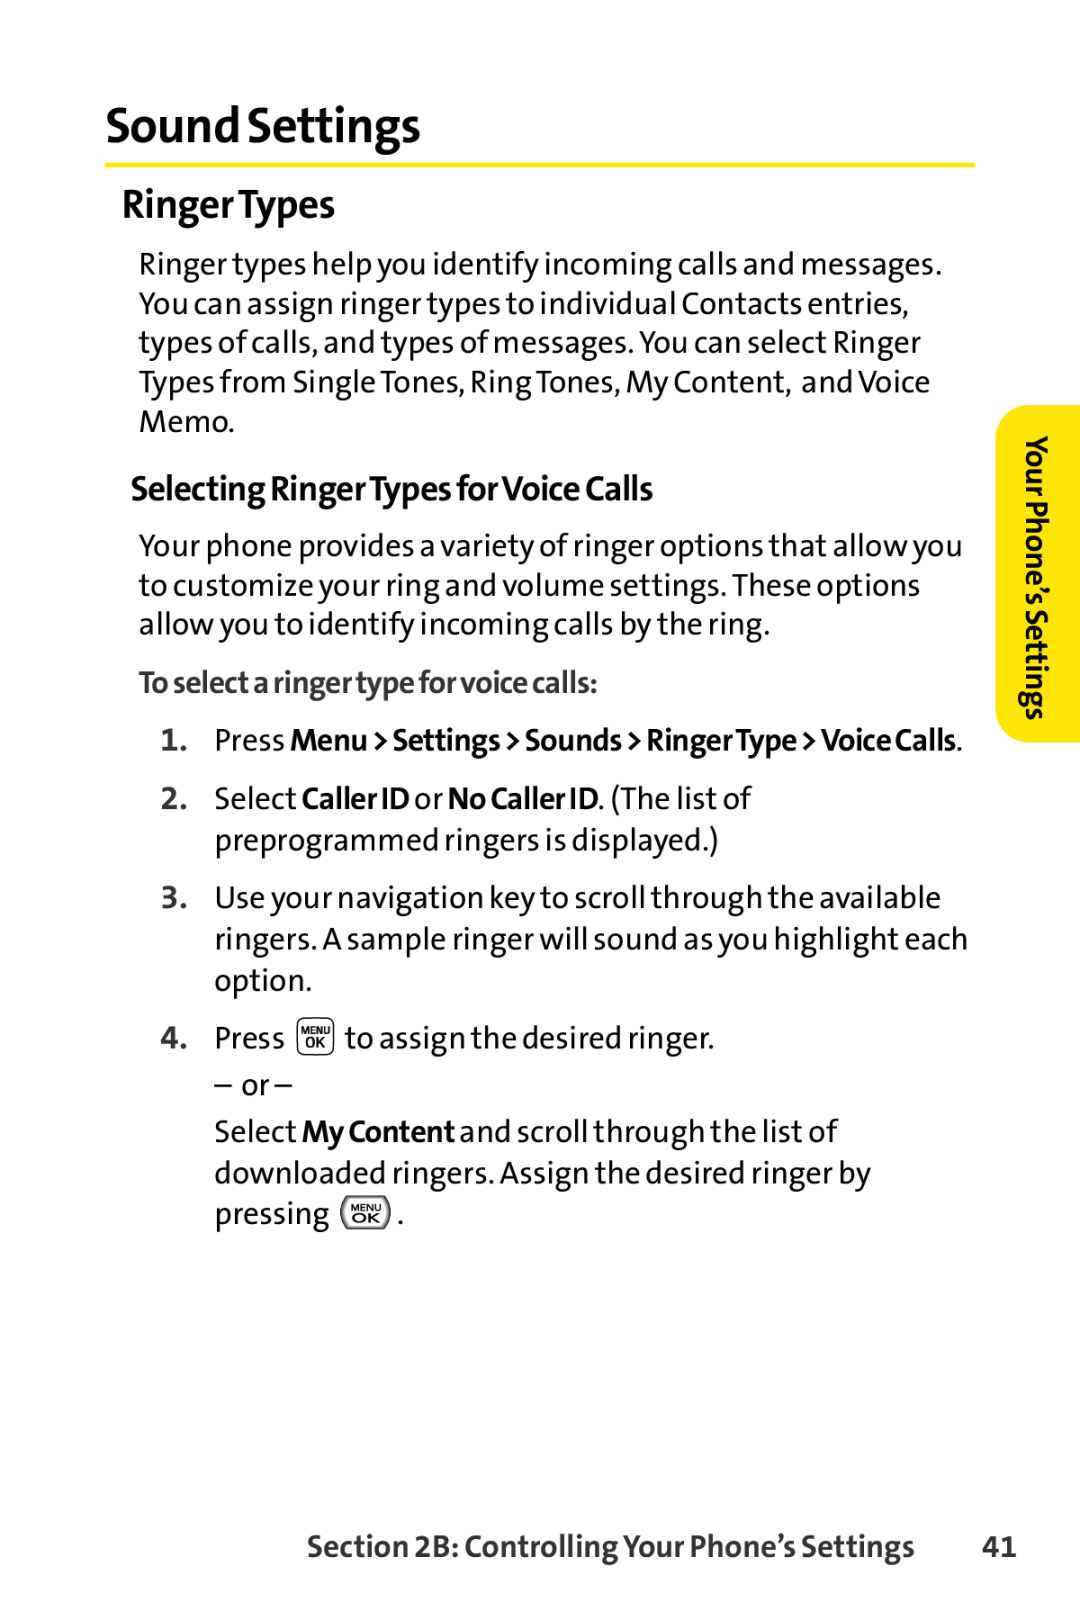 Sprint Nextel LX160 manual Sound Settings, SelectingRingerTypesforVoiceCalls, Toselectaringertypeforvoicecalls 